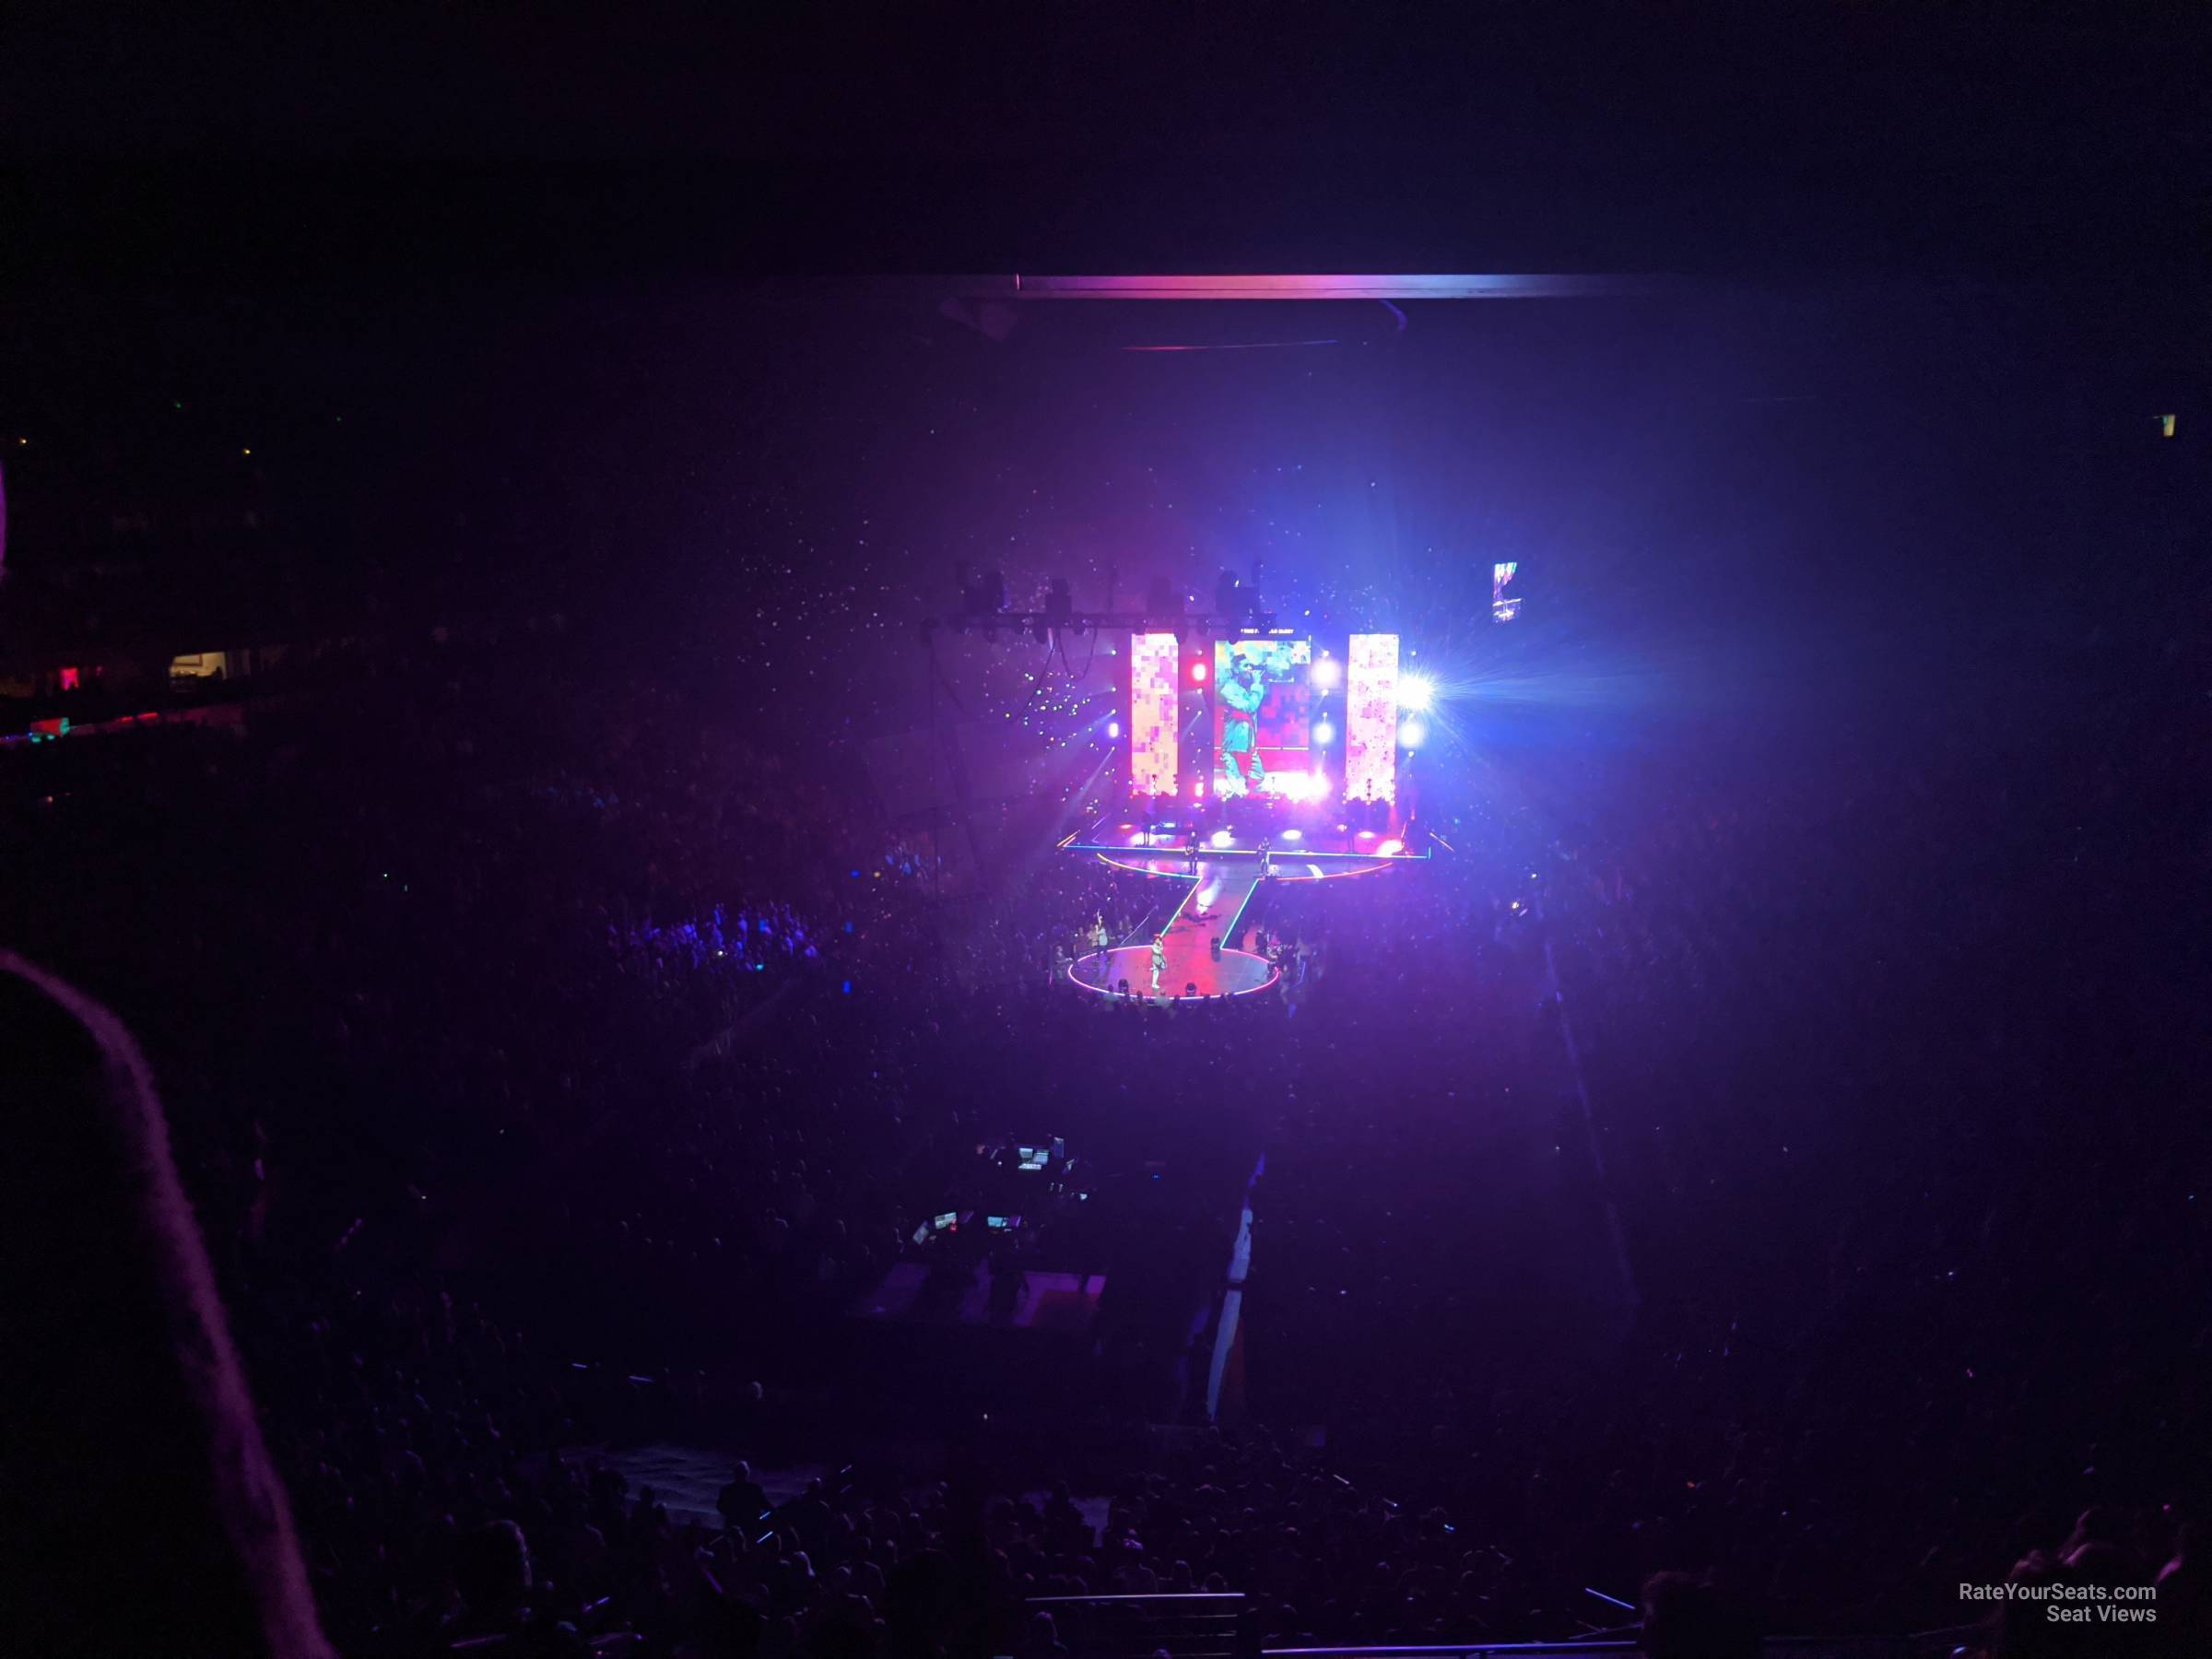 head-on concert view at Bridgestone Arena